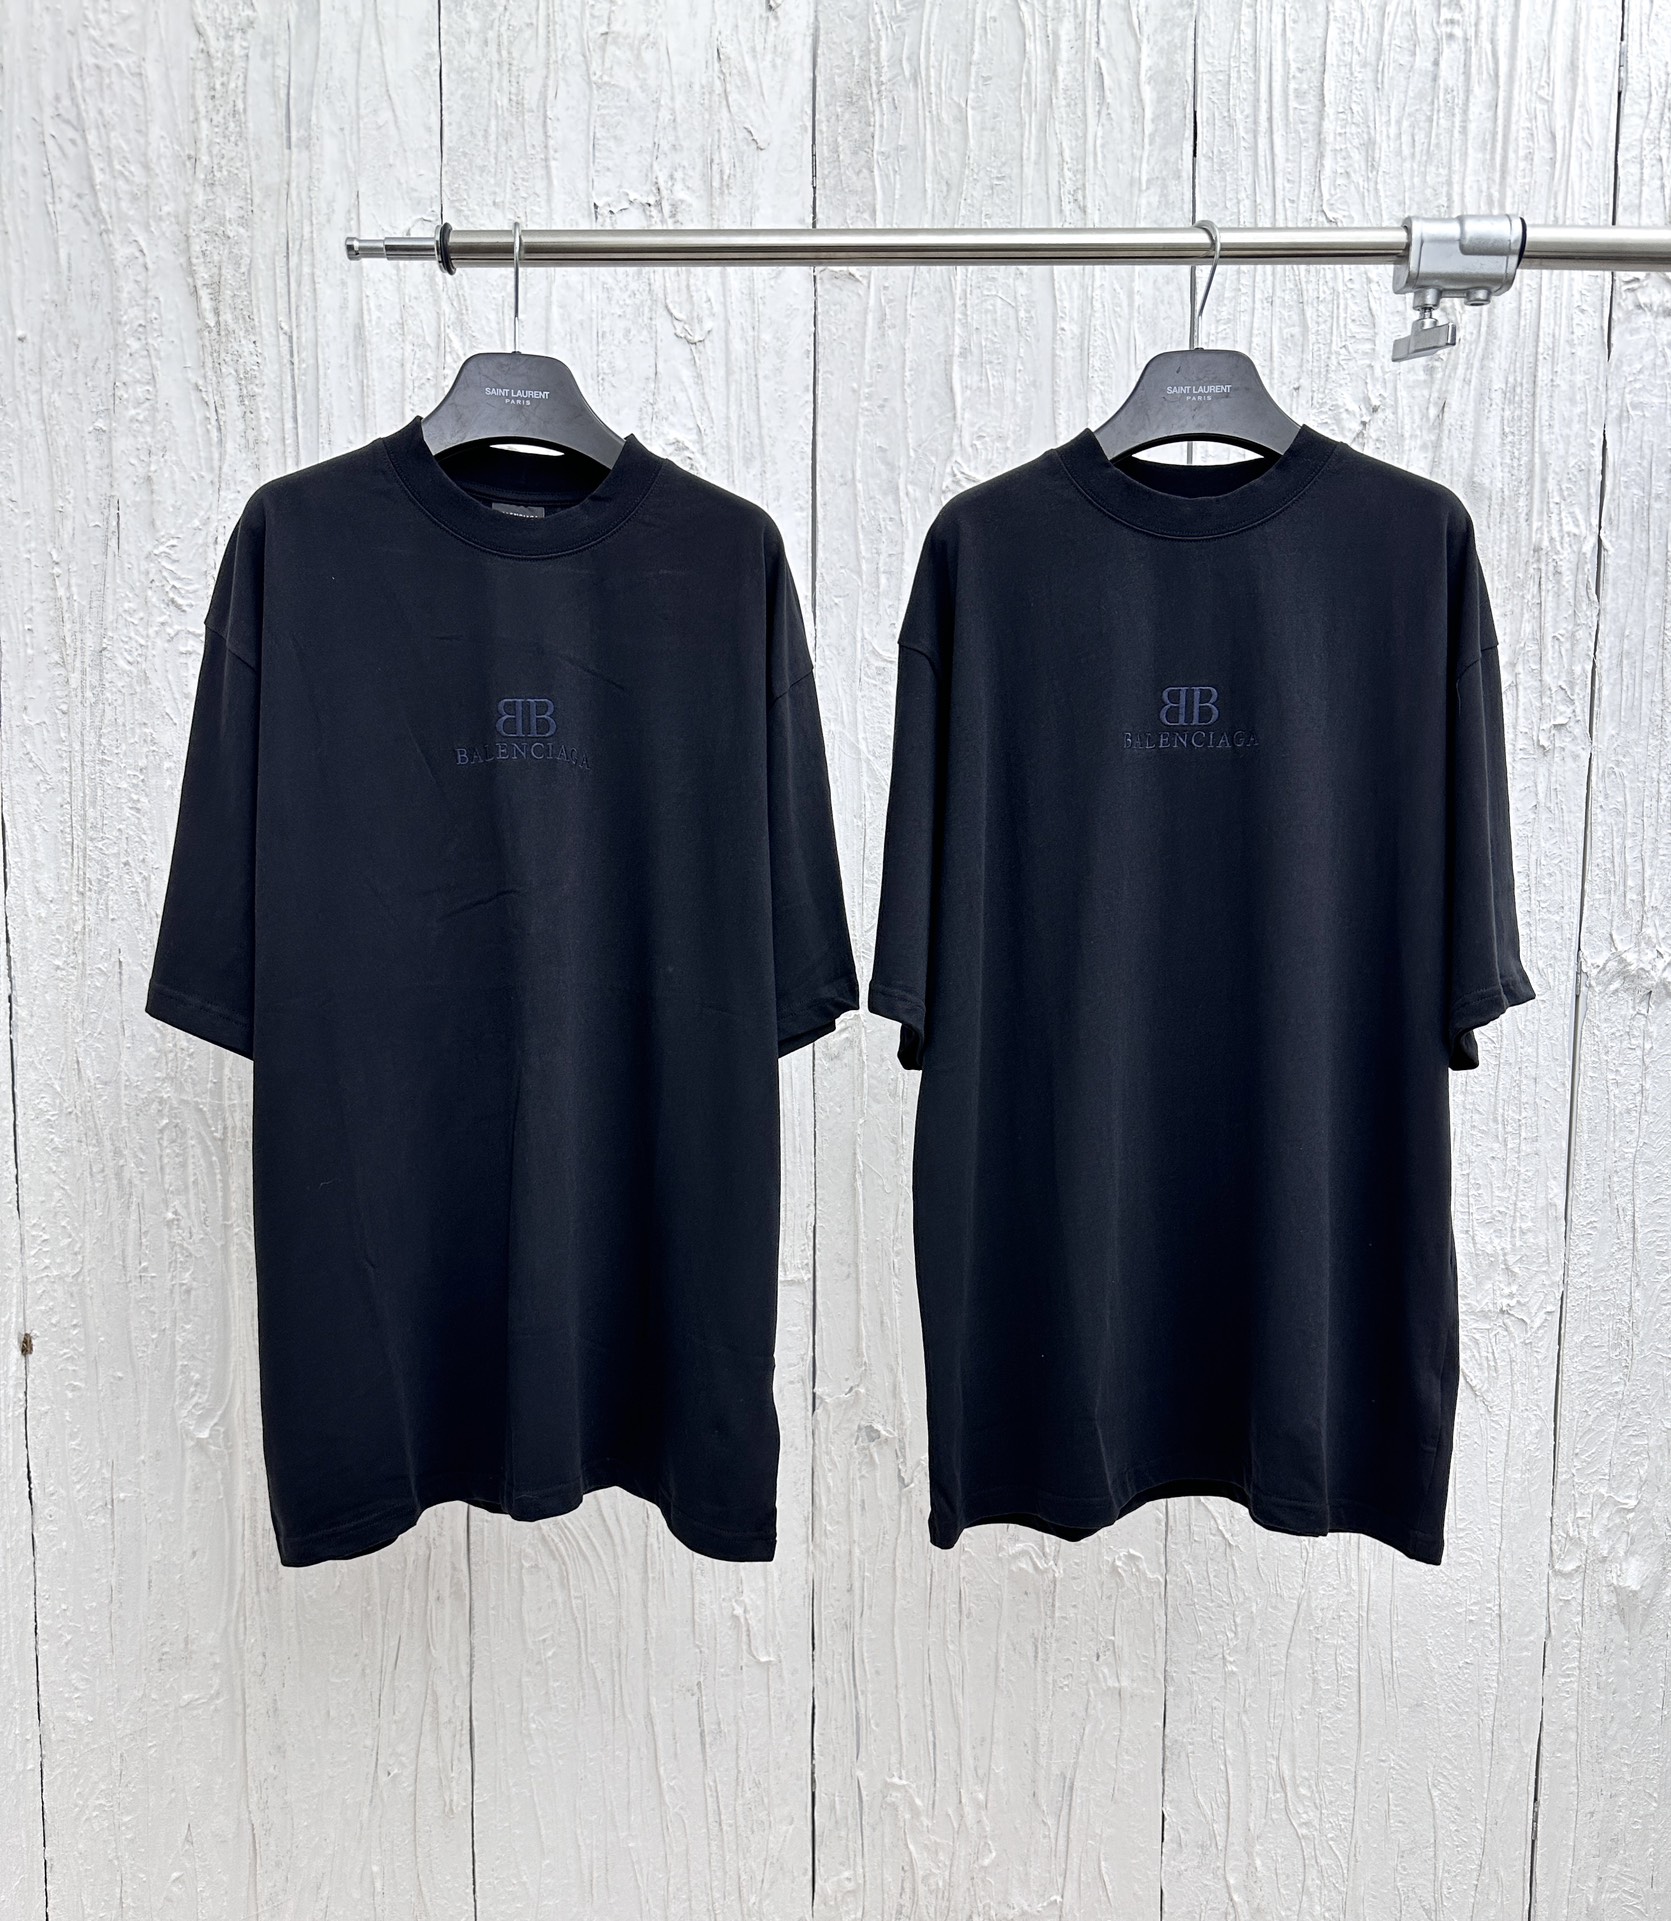 Balenciaga Clothing T-Shirt Embroidery Short Sleeve